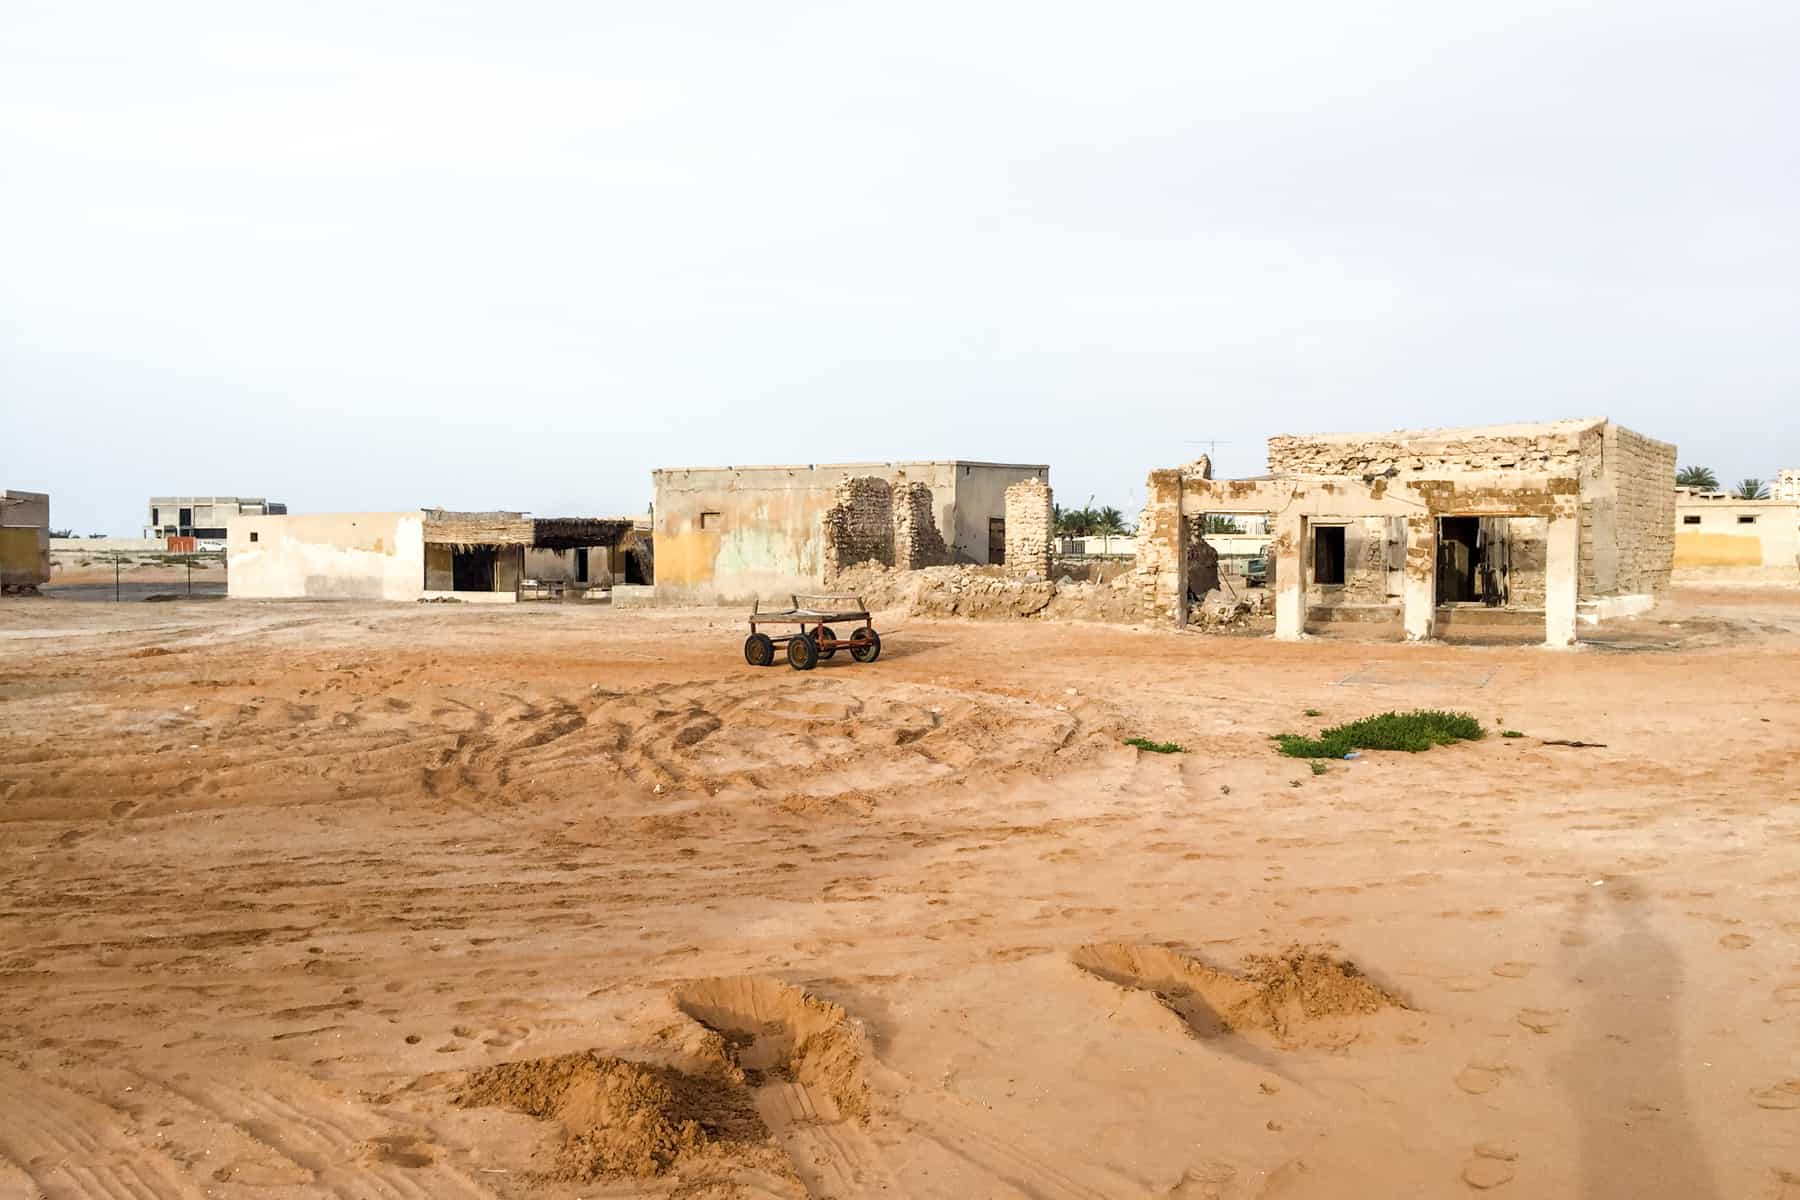 A flat buggy car stands alone in the orange sand, in front of crumbling rectangular buildings in Al Jazirat Al Hamra ghost town in Ras Al Khaimah 